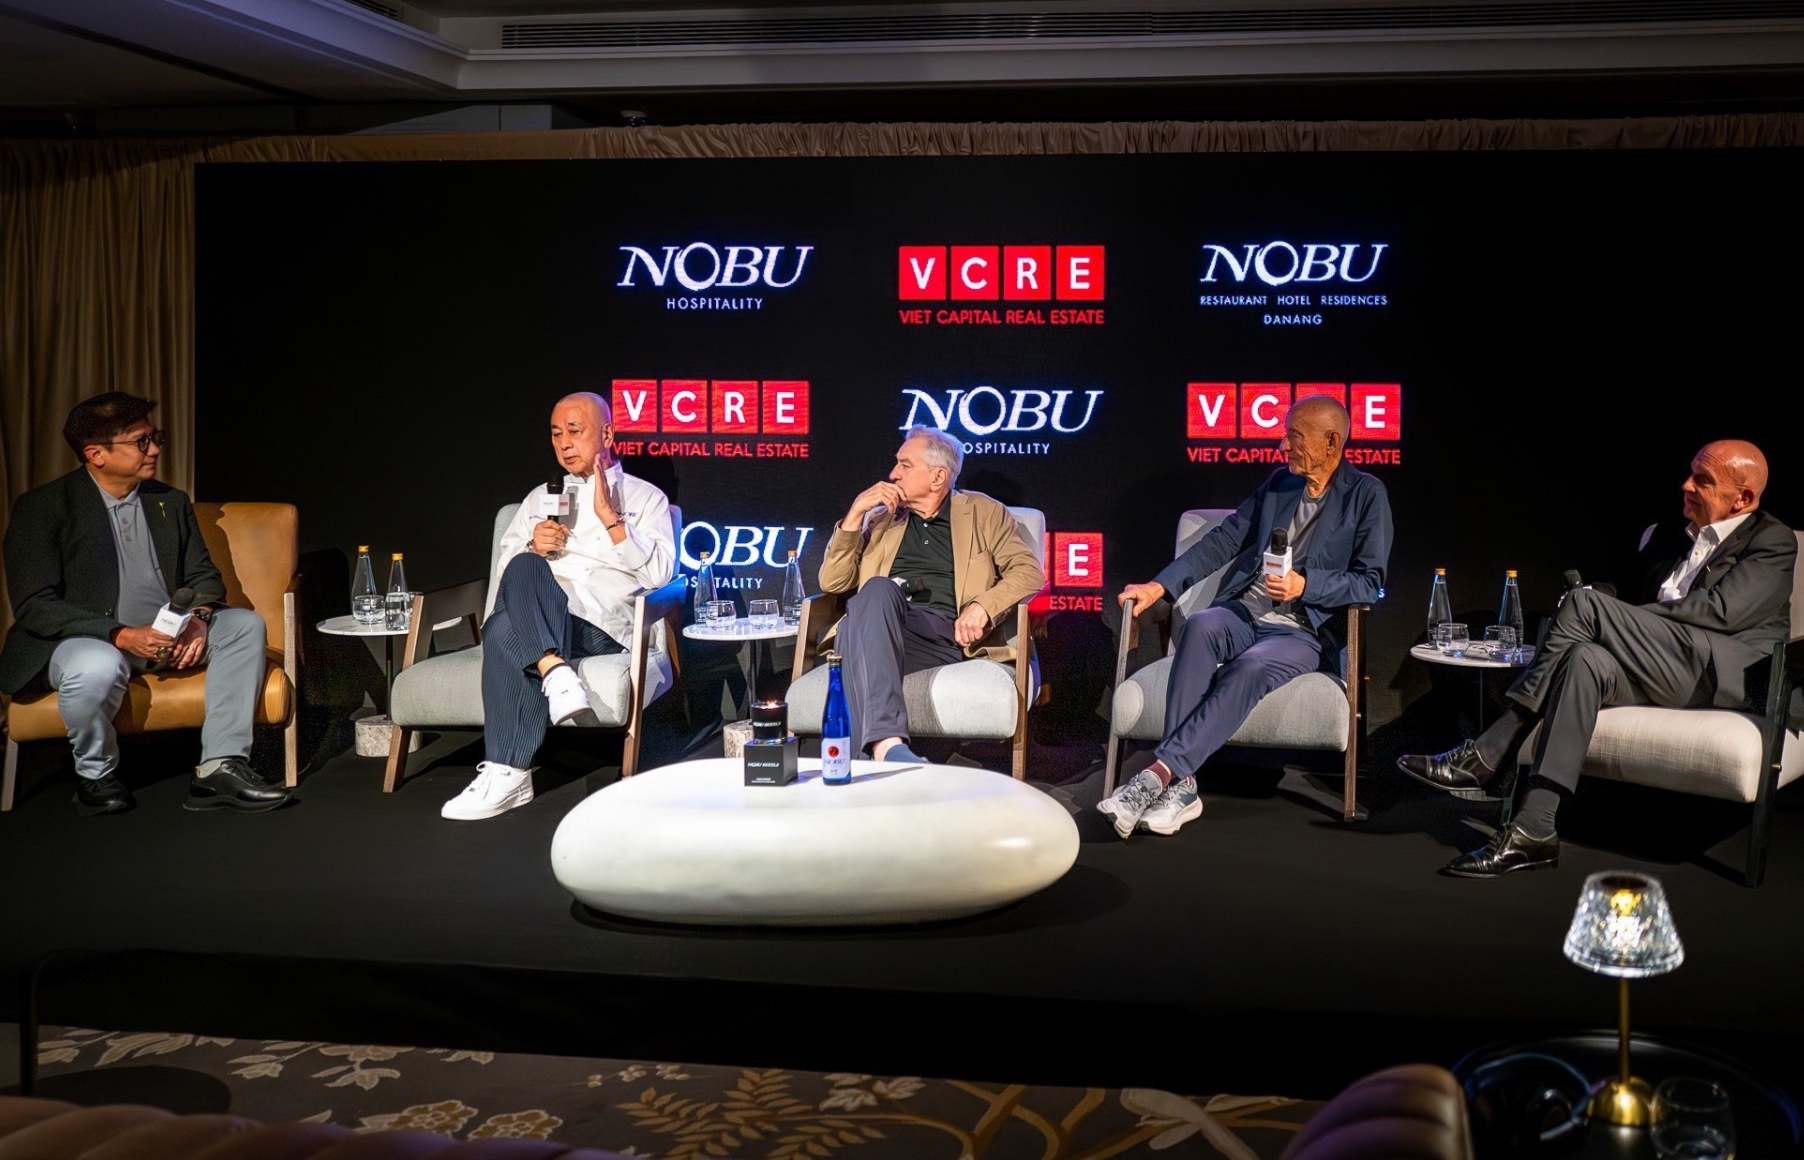 Robert De Niro visits Vietnam with Nobu Hospitality co-founders